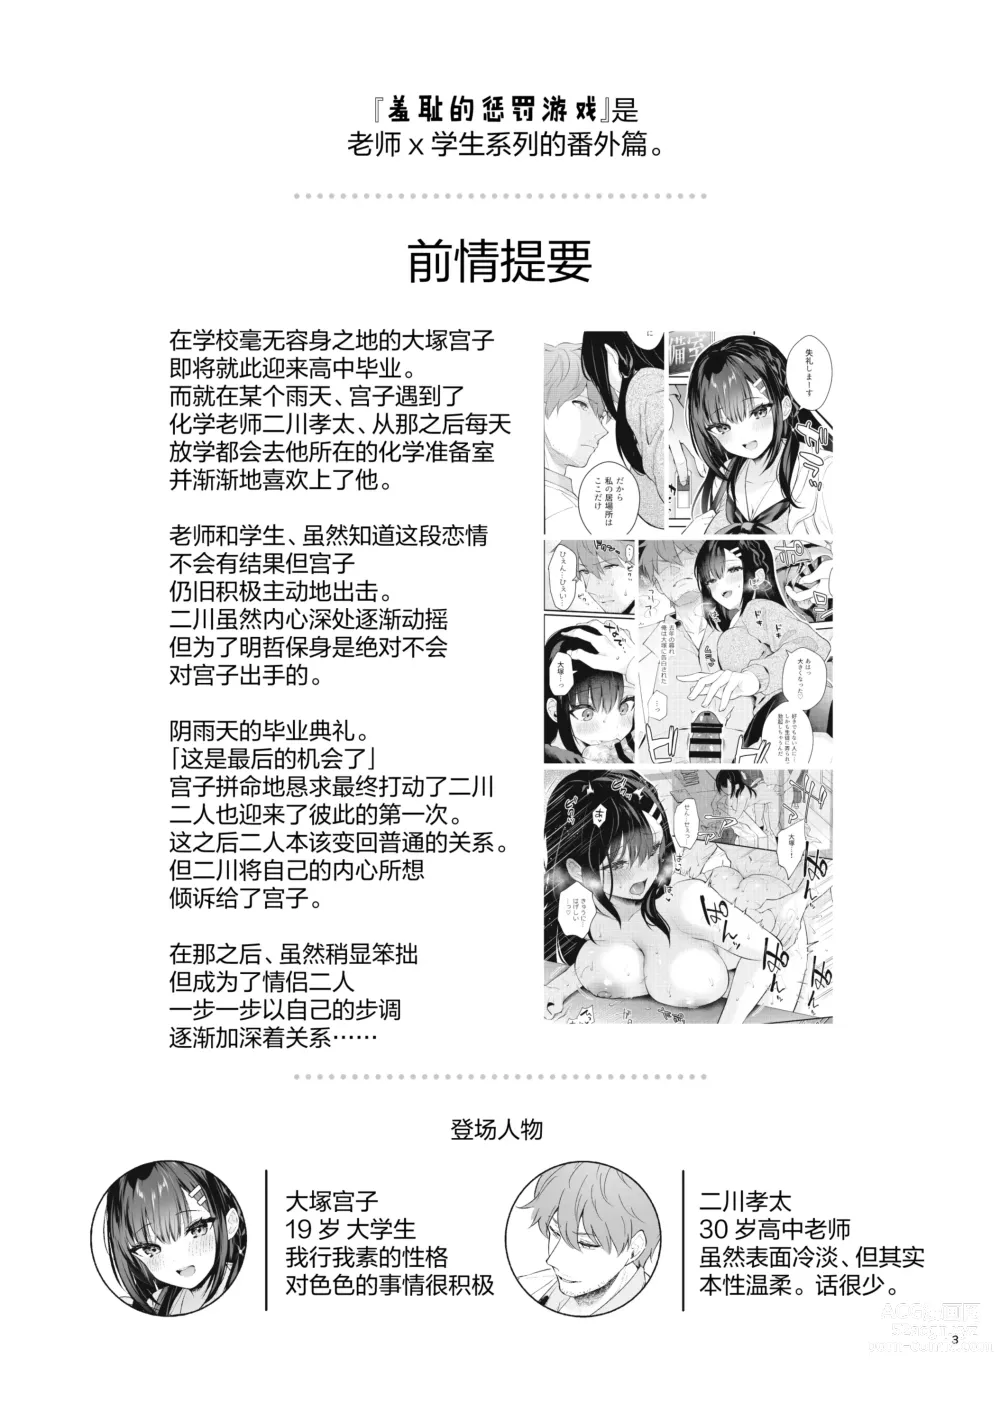 Page 4 of doujinshi 脸红心跳惩罚游戏